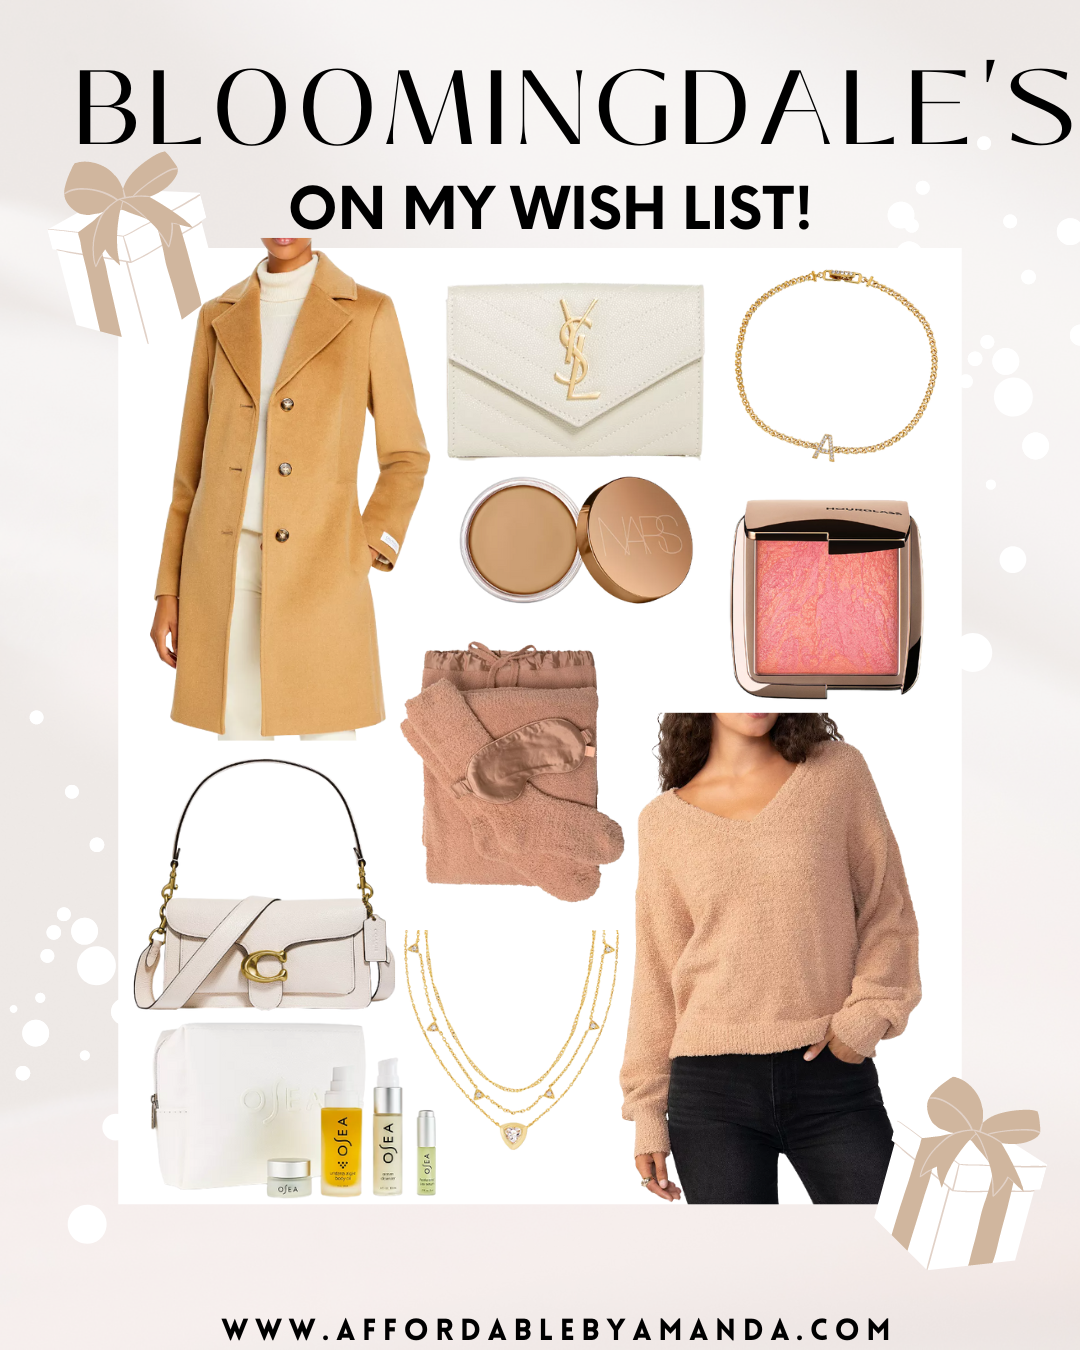 My Holiday Wishlist at Bloomingdale's - Affordable by Amanda